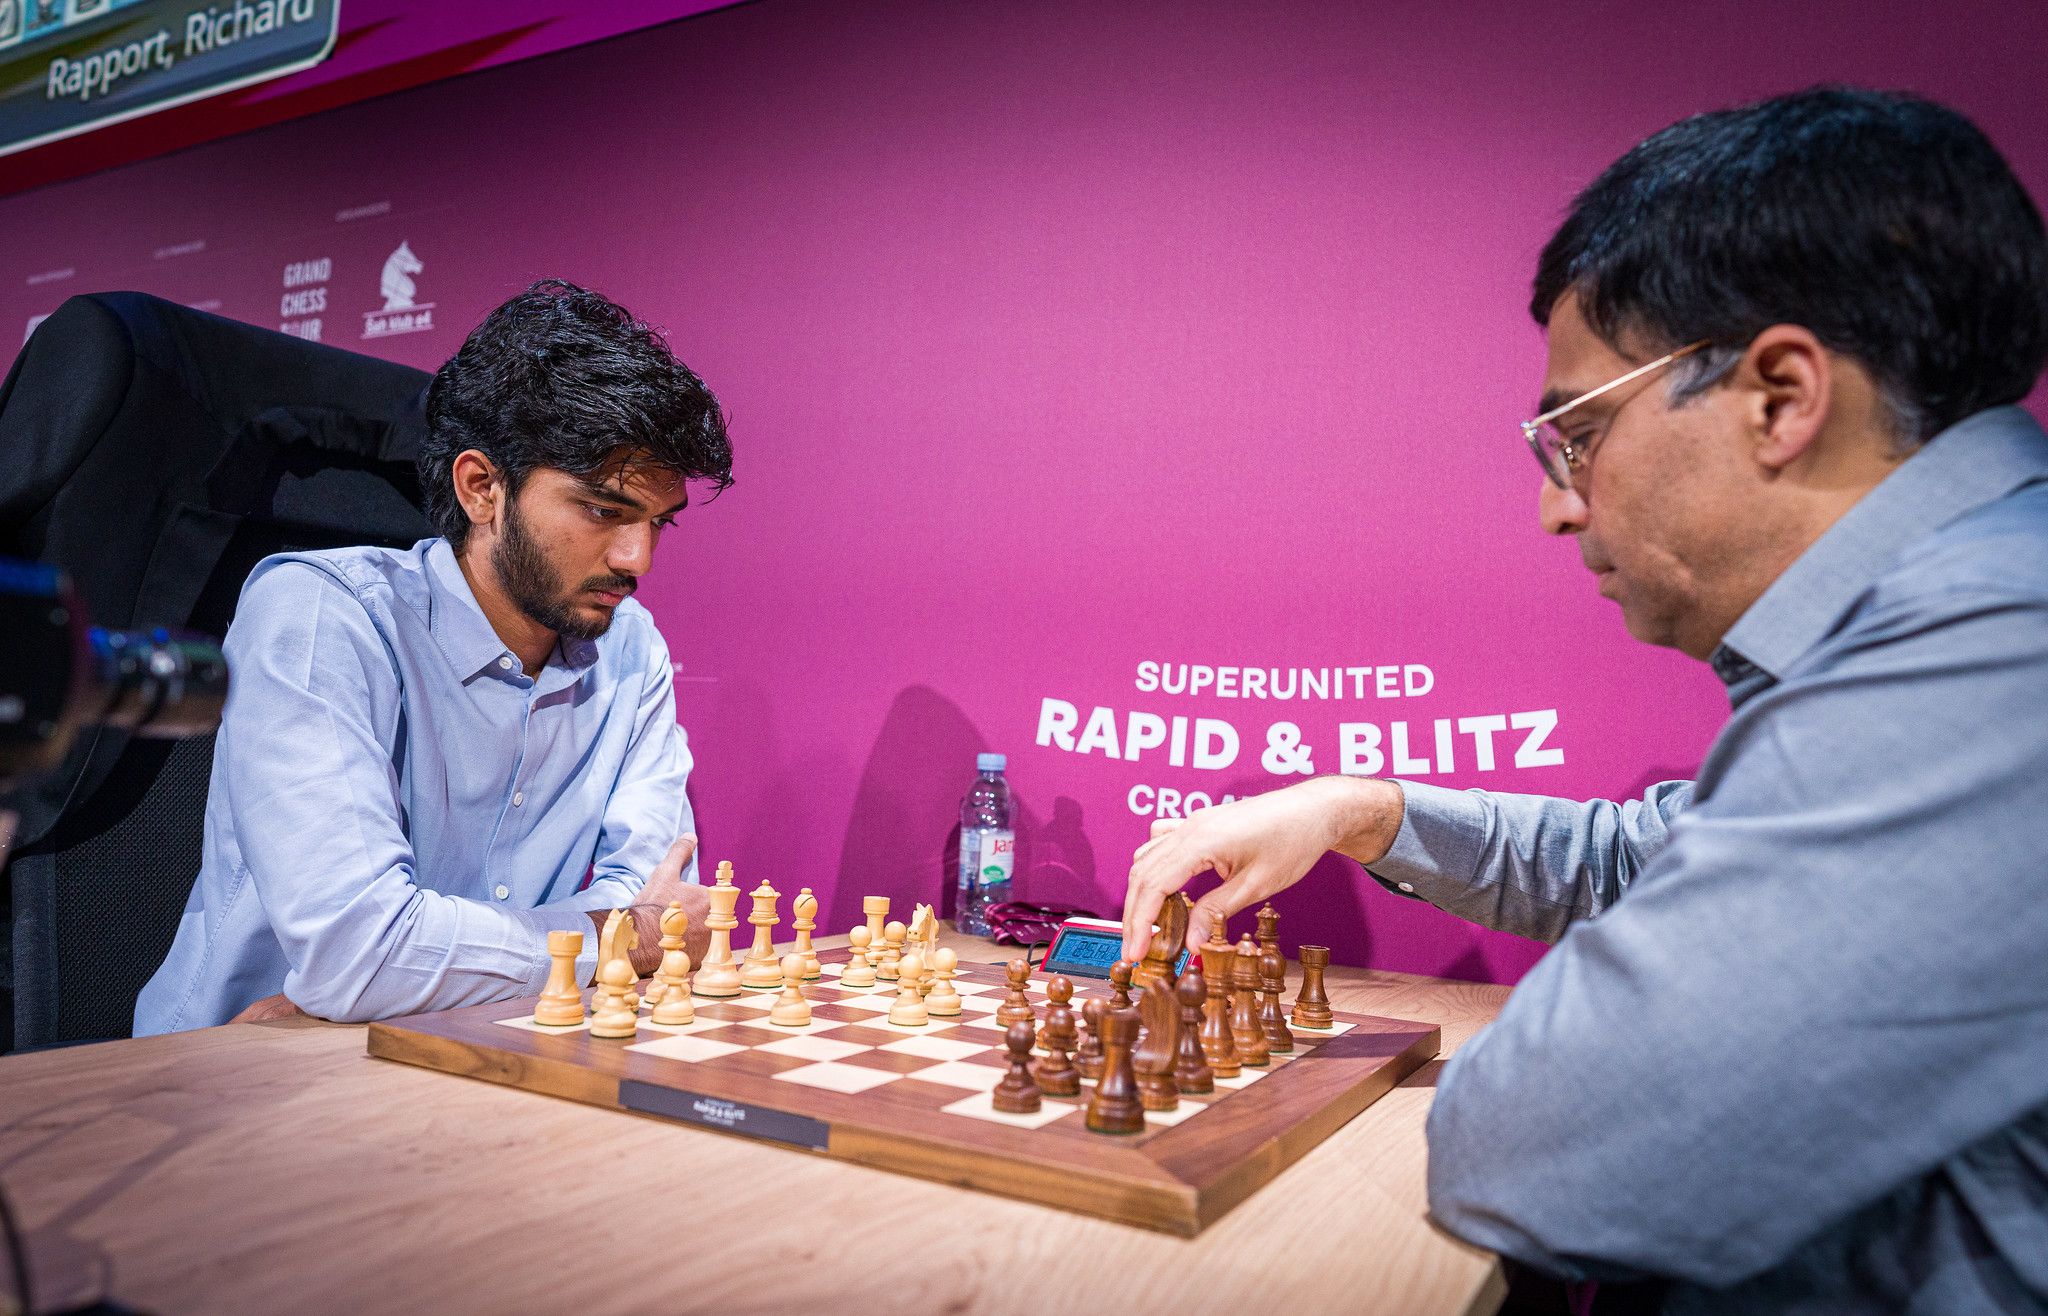 ChessBase India - FIDE World Cup Round 1 TB: Gukesh beats